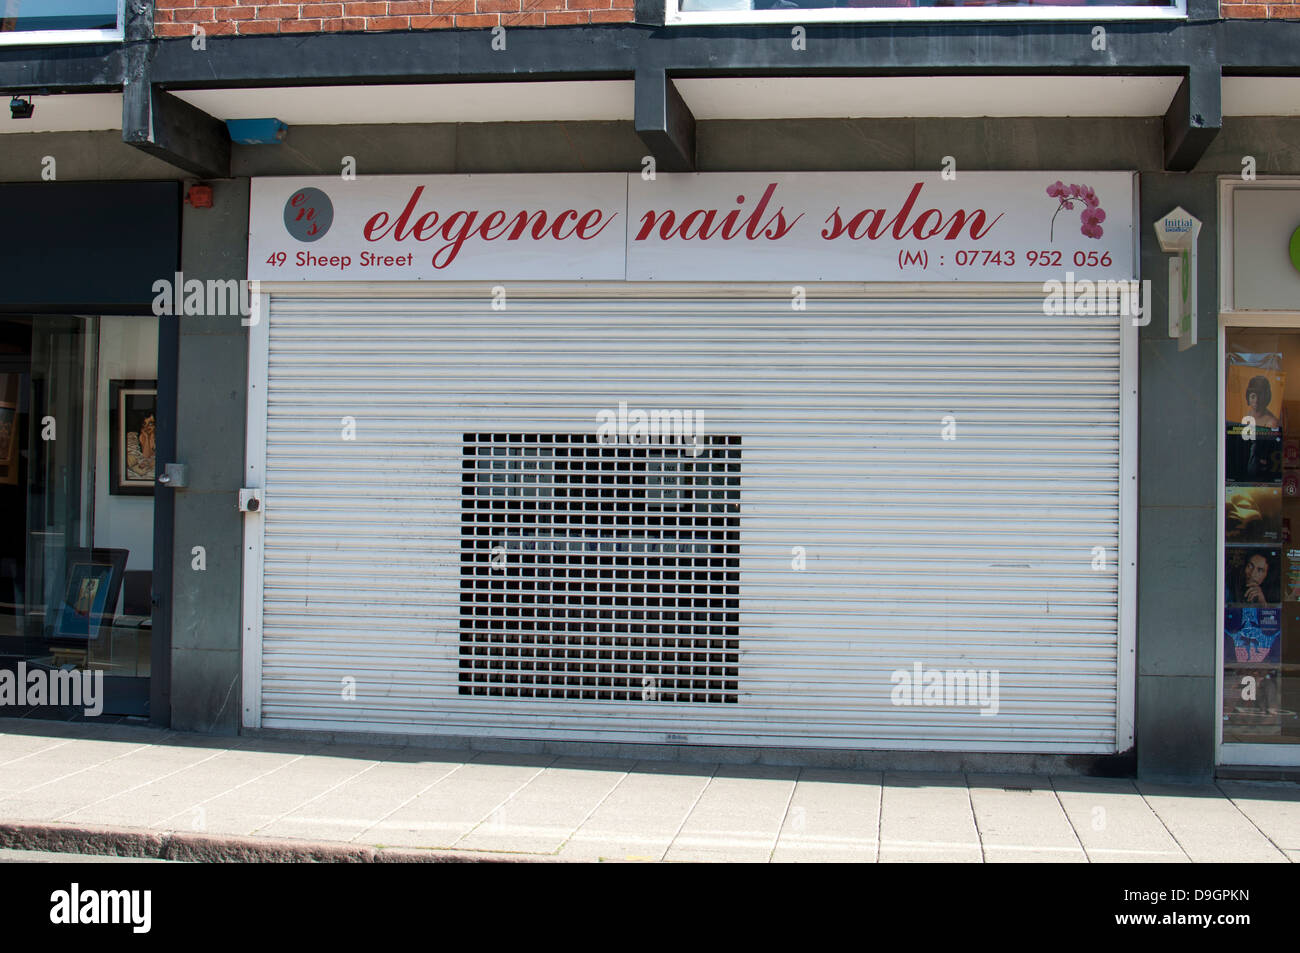 Spelling mistake on nails salon, elegence instead of elegance Stock Photo